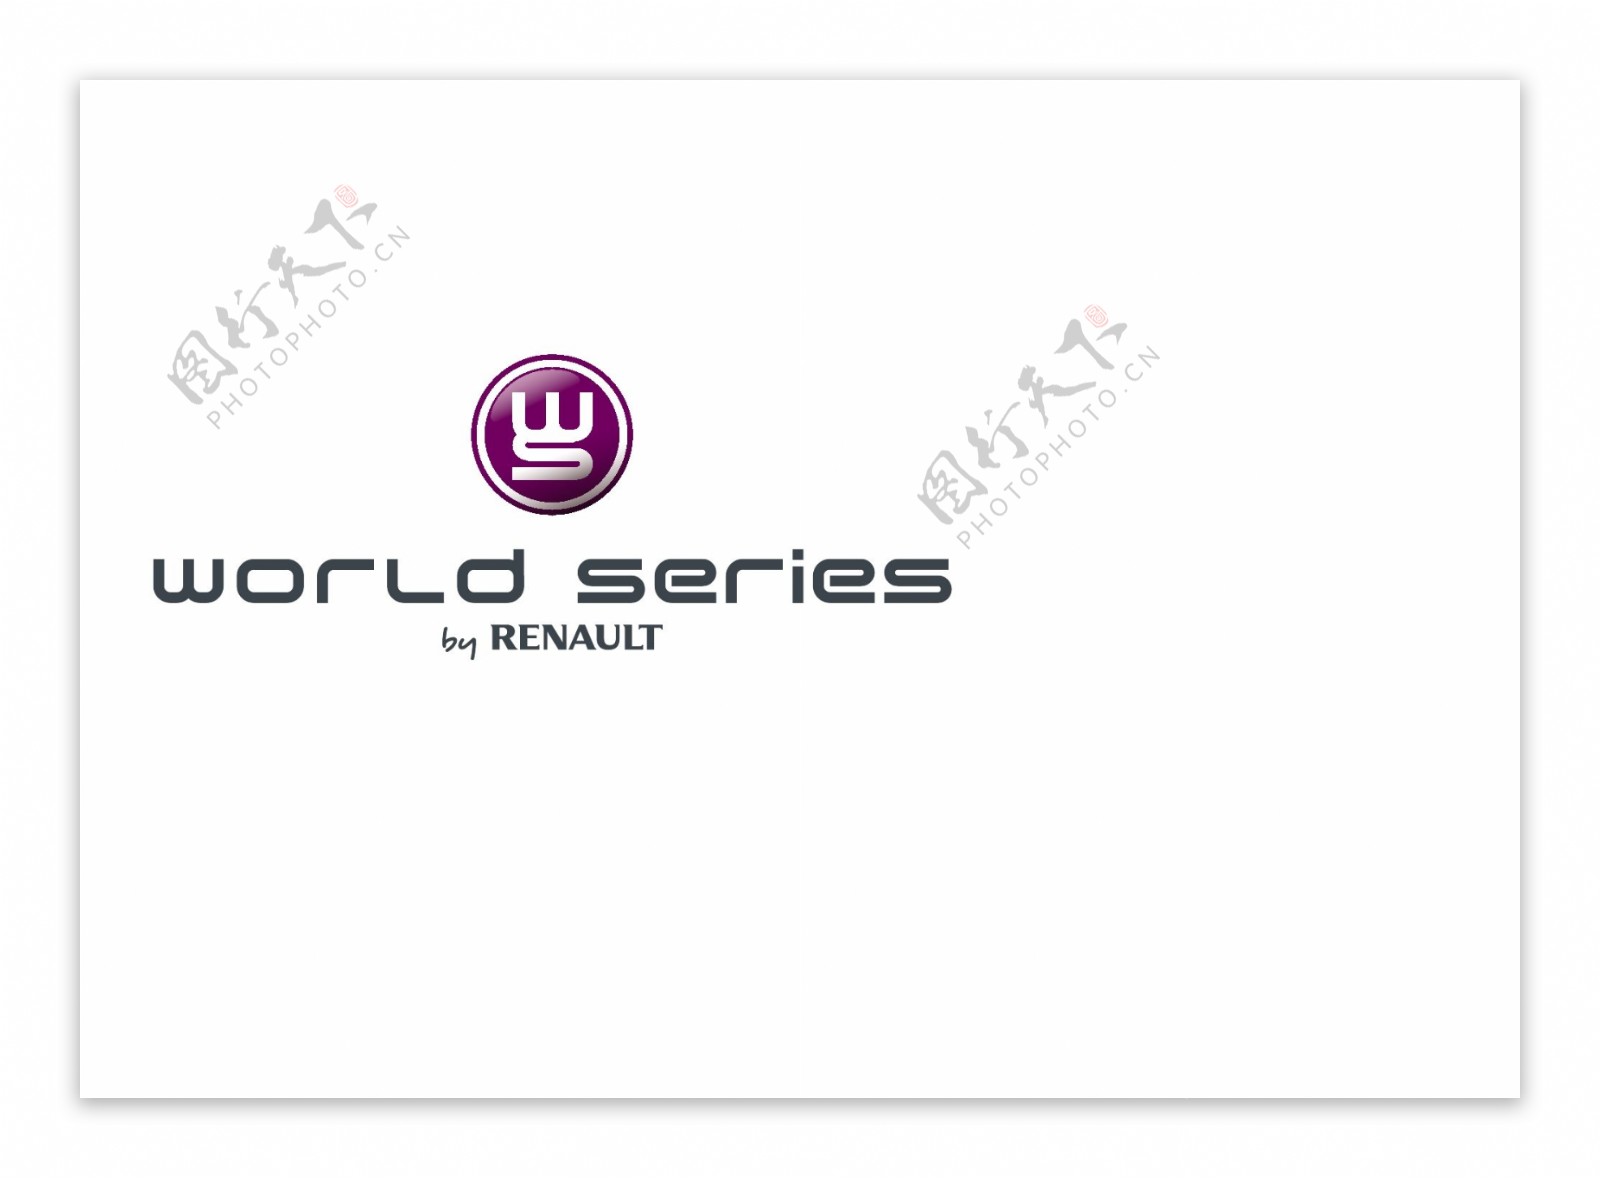 WorldSeriesbyRenaultlogo设计欣赏WorldSeriesbyRenault矢量名车logo下载标志设计欣赏